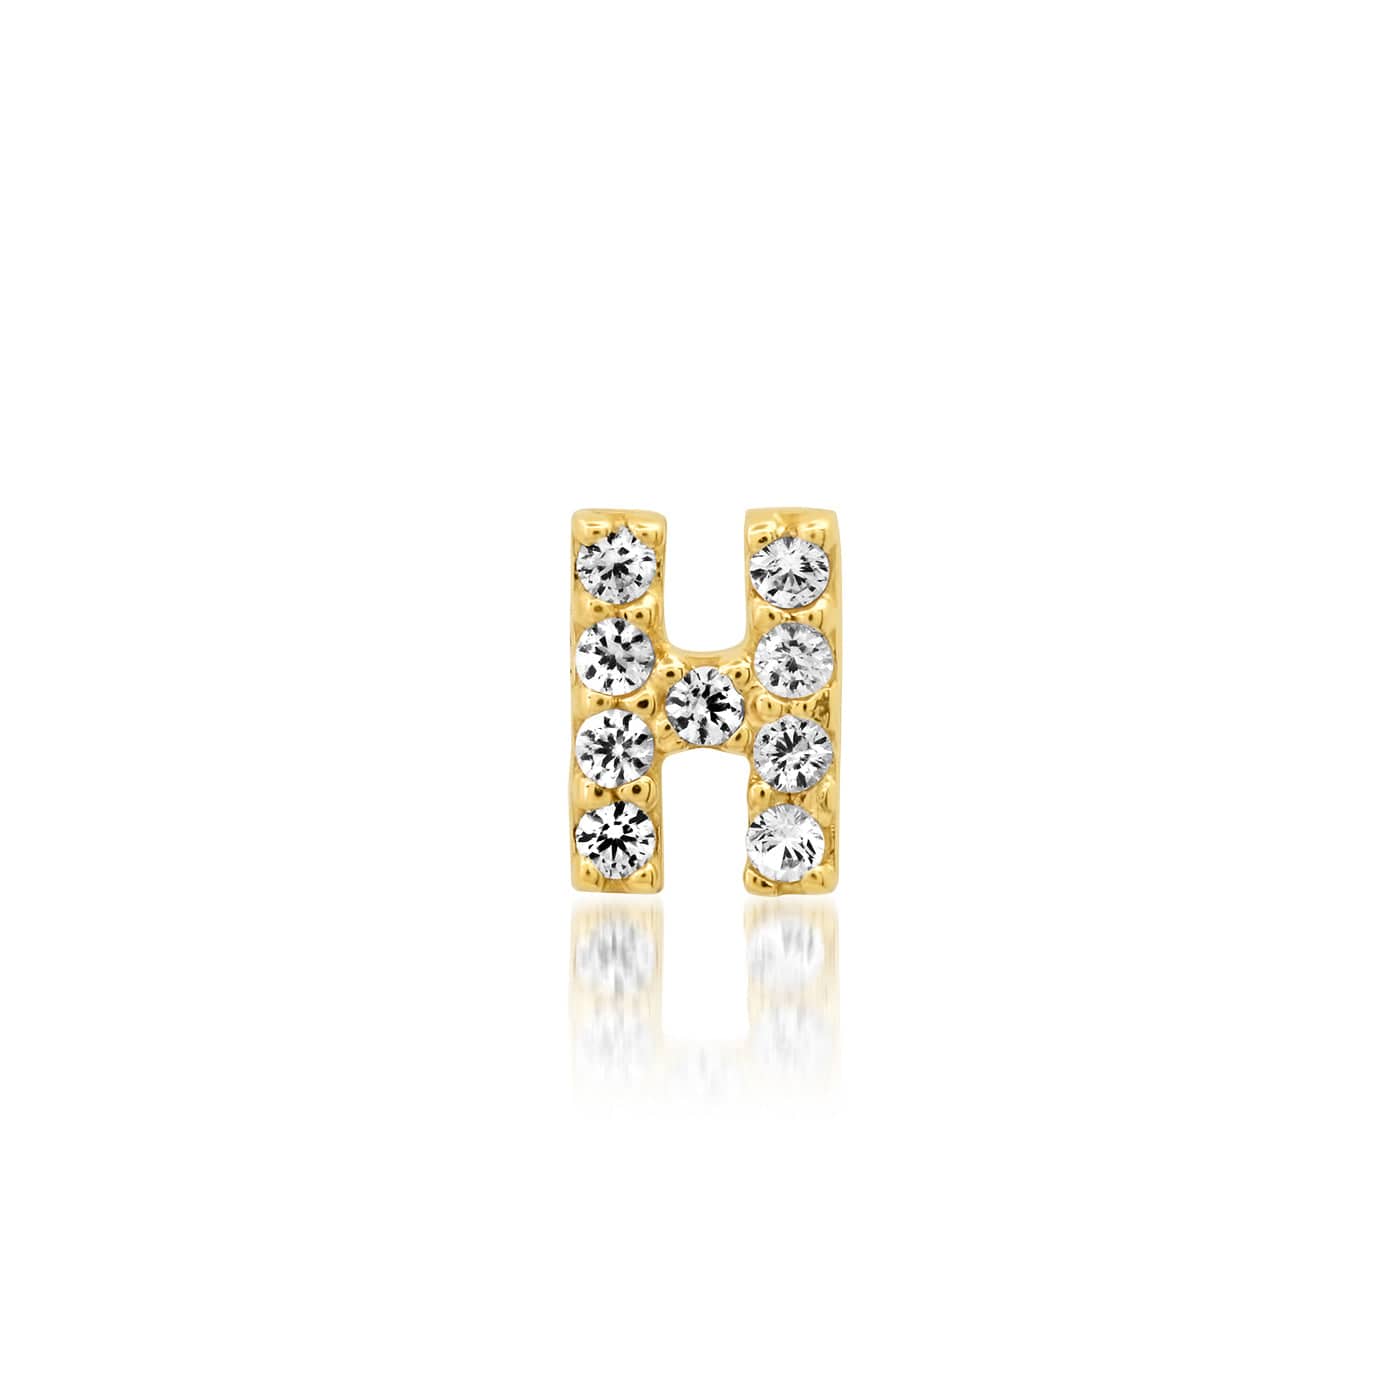 TAI JEWELRY Earrings 14k White Sapphire Monogram Stud